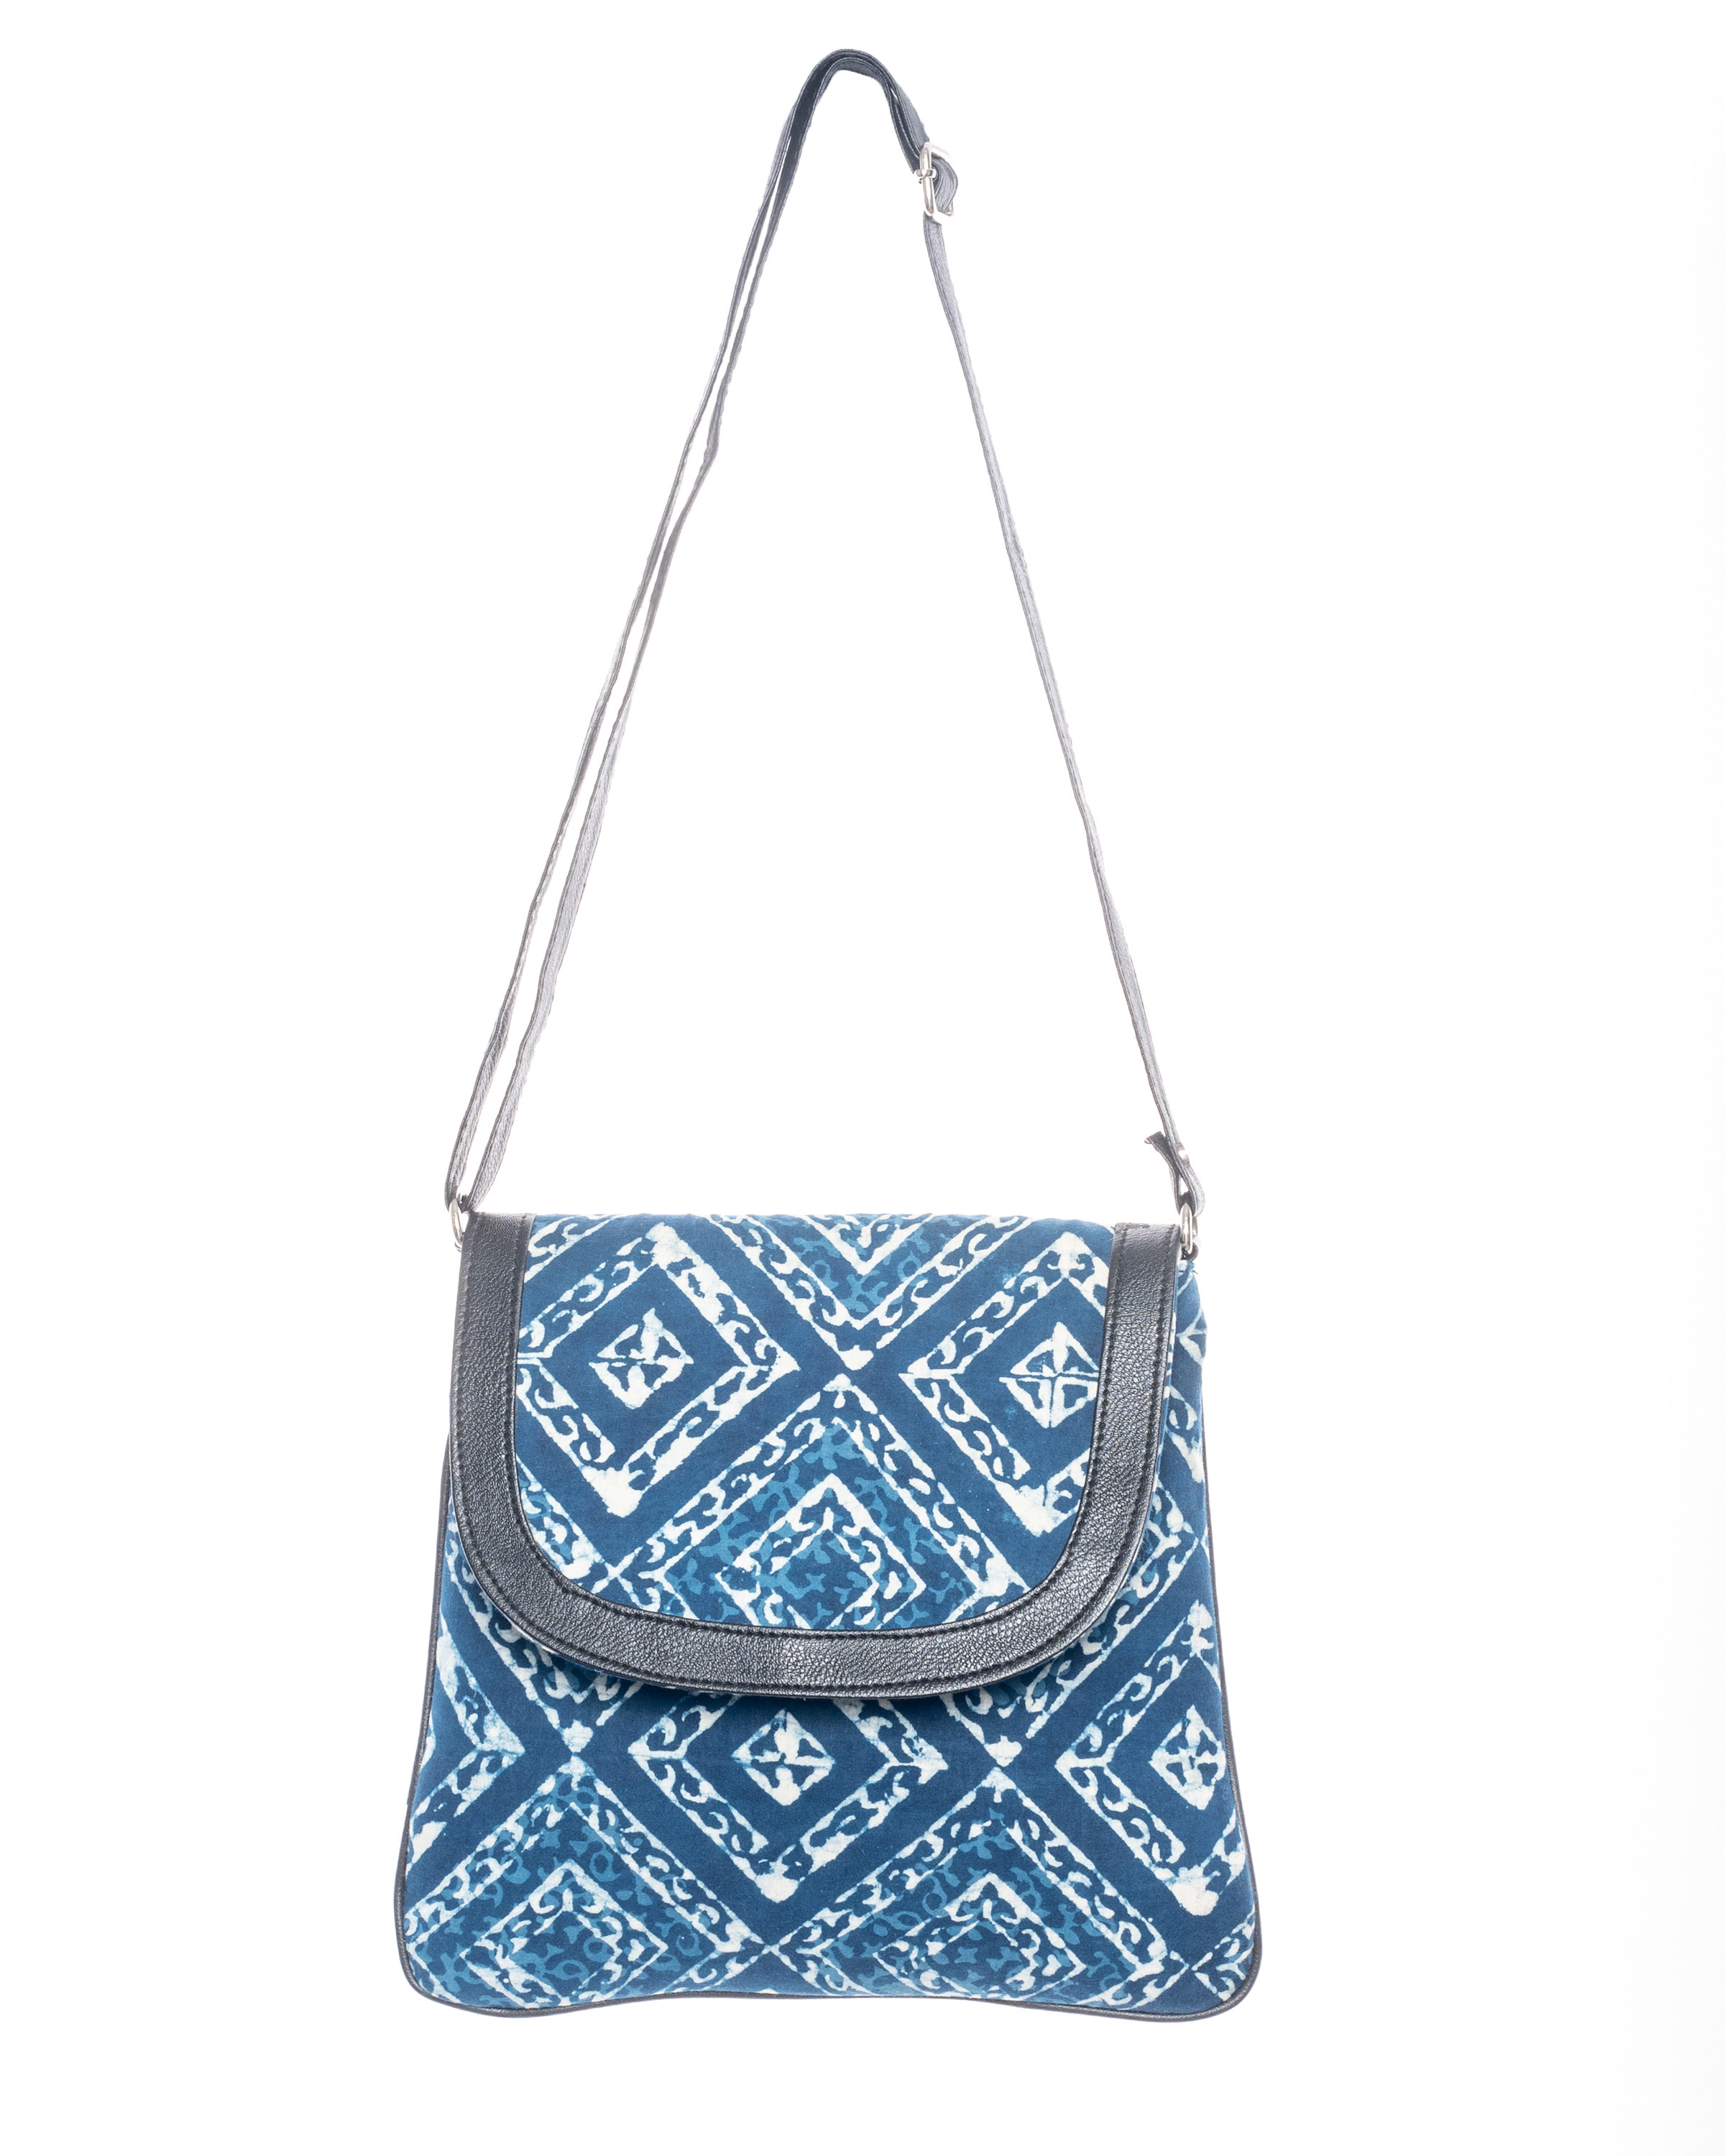 Look and Adorn Handcrafted Stylish Rectangular Indigo Blue Sling Bag ...